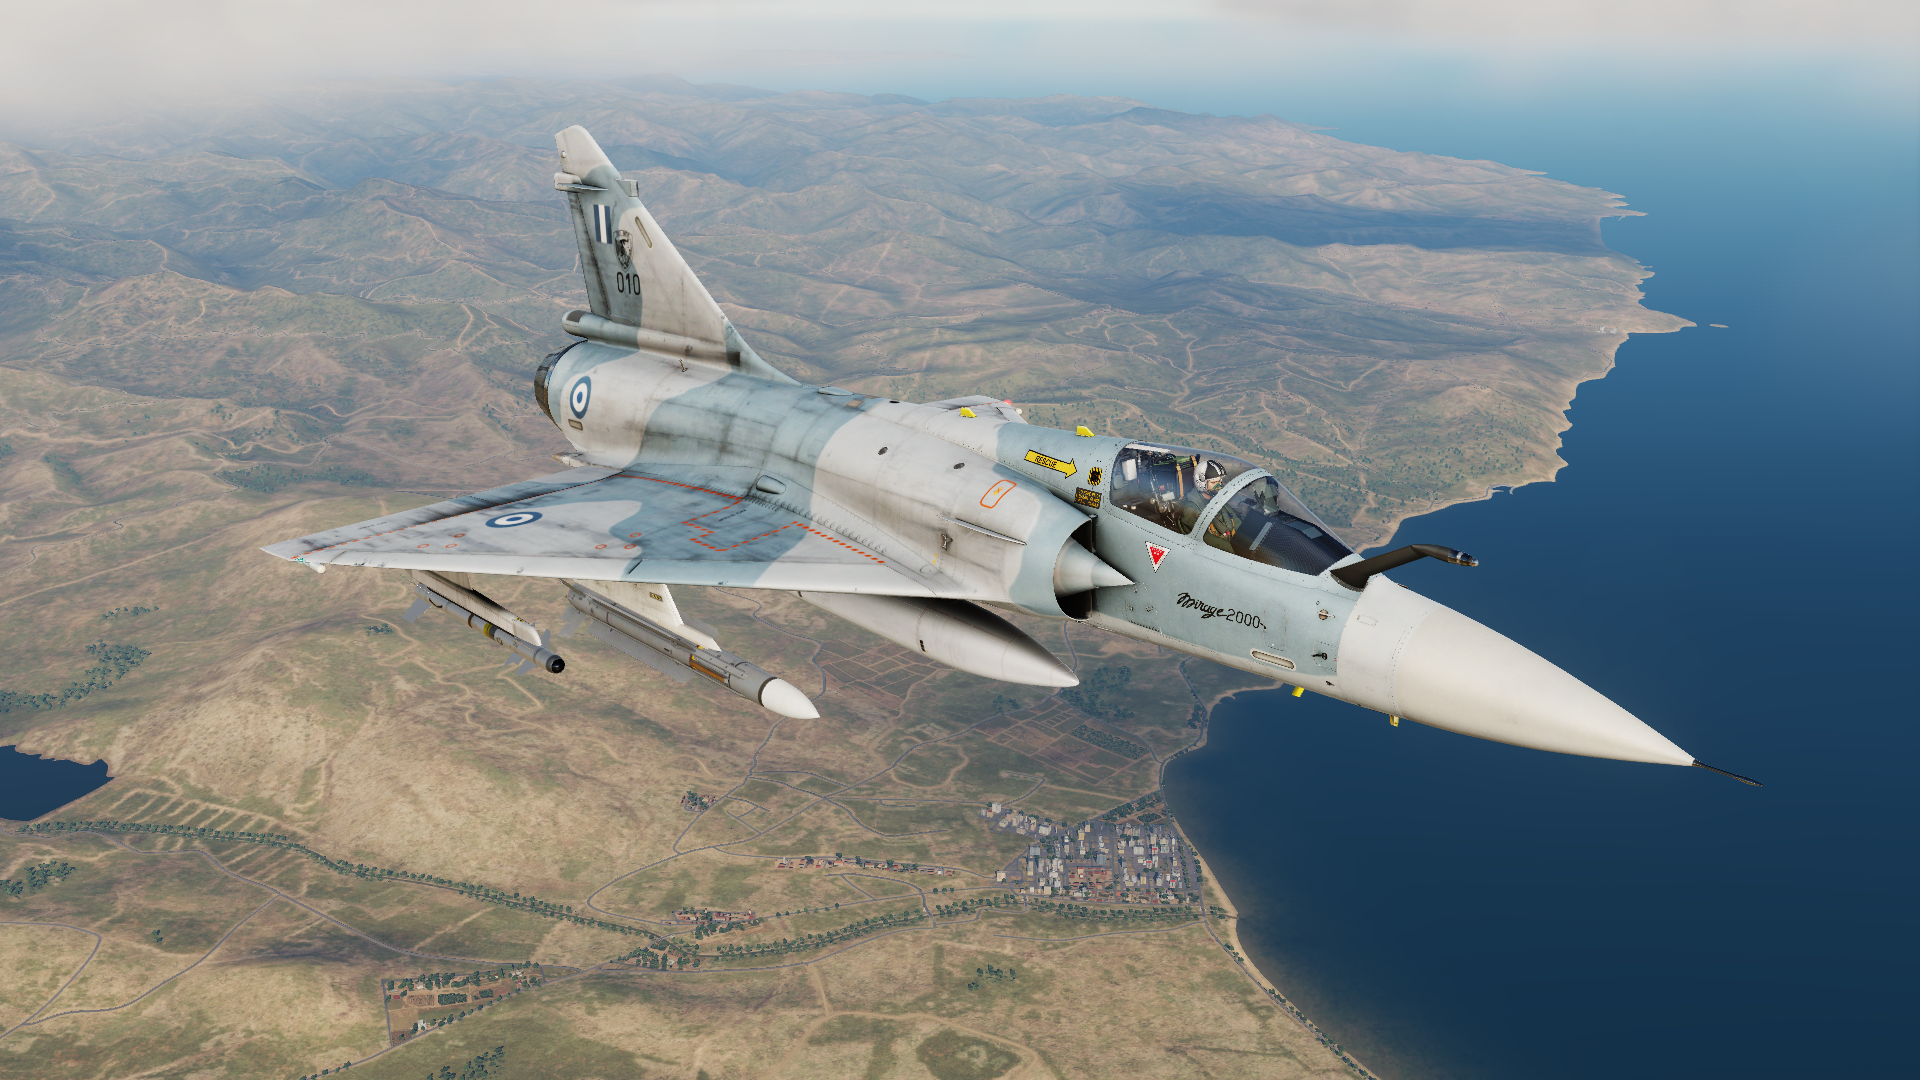 General 1920x1080 Digital Combat Simulator Mirage 2000 aircraft airplane video games screen shot Dassault Aviation french aircraft